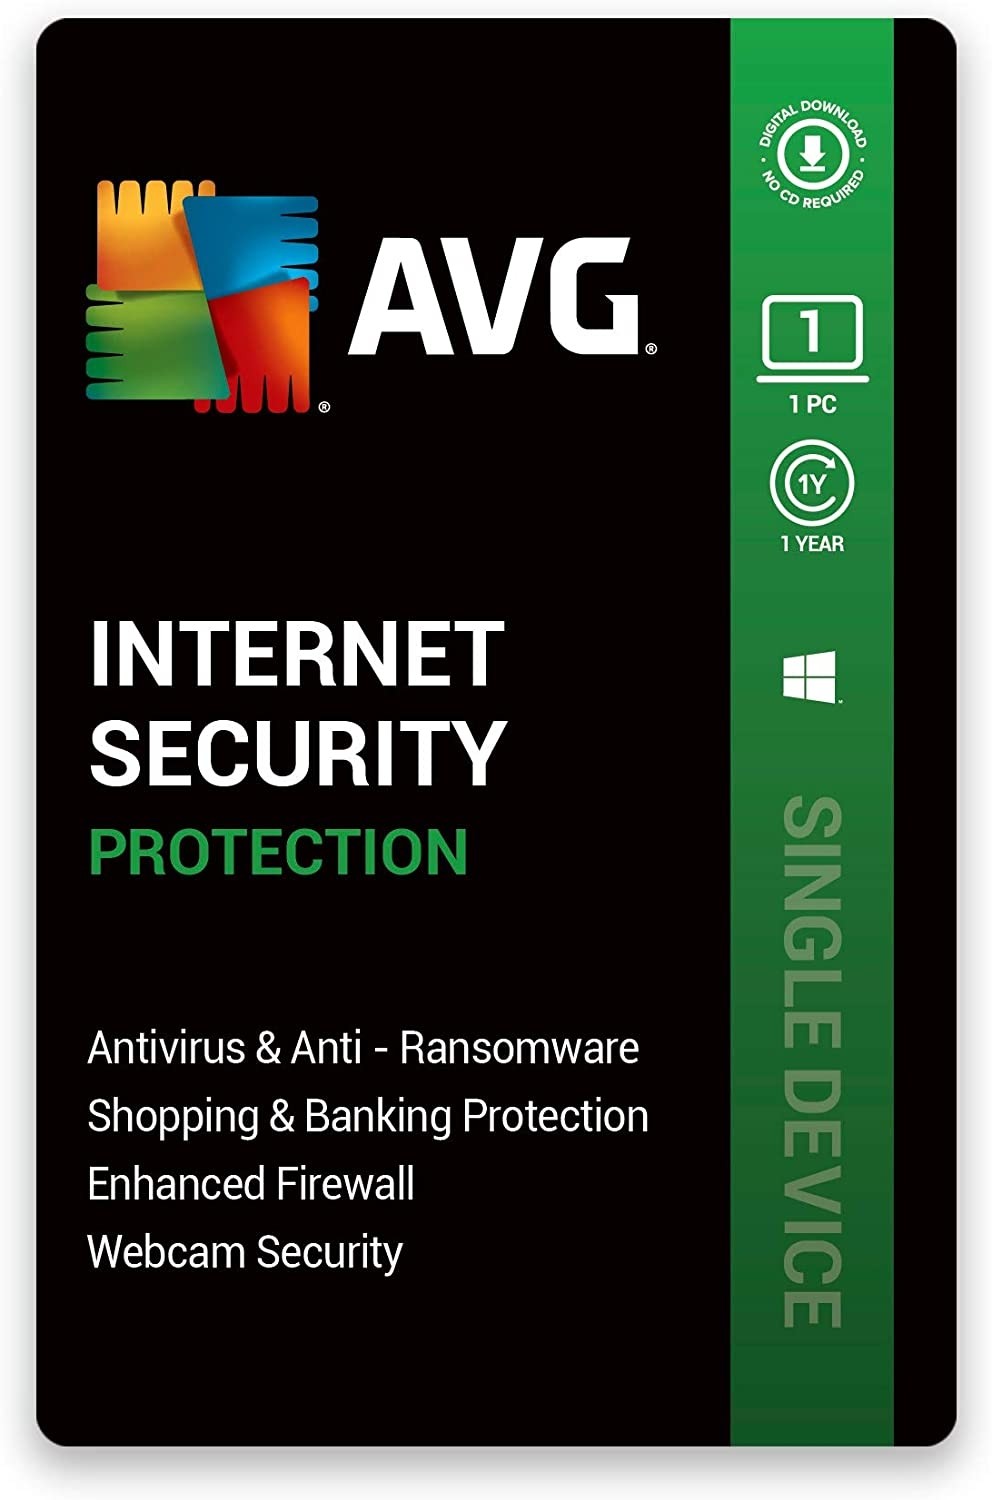  AVG Internet Security 1 PC 1 Year 